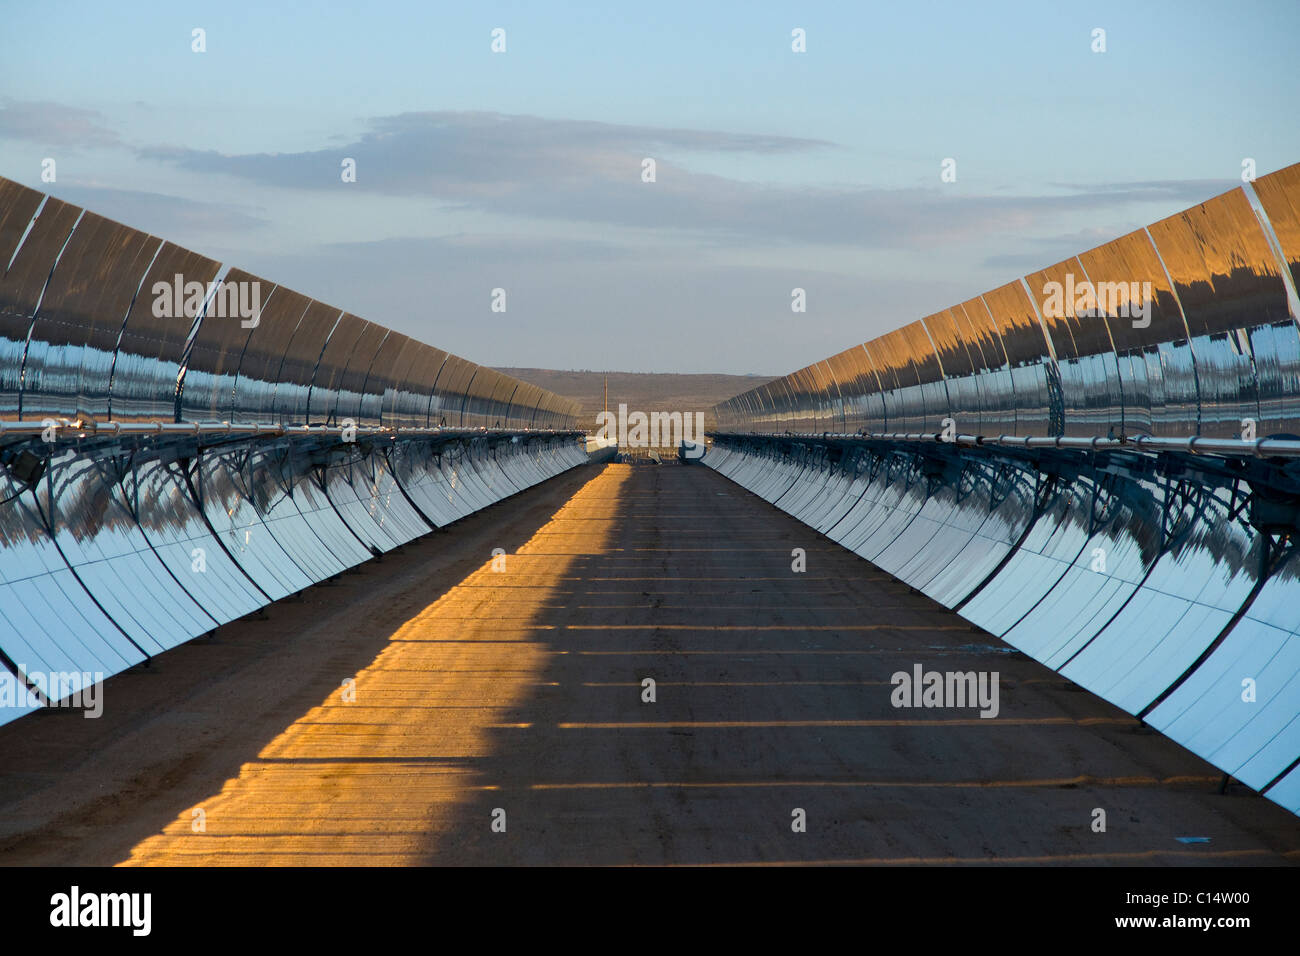 A solar power plant Stock Photo